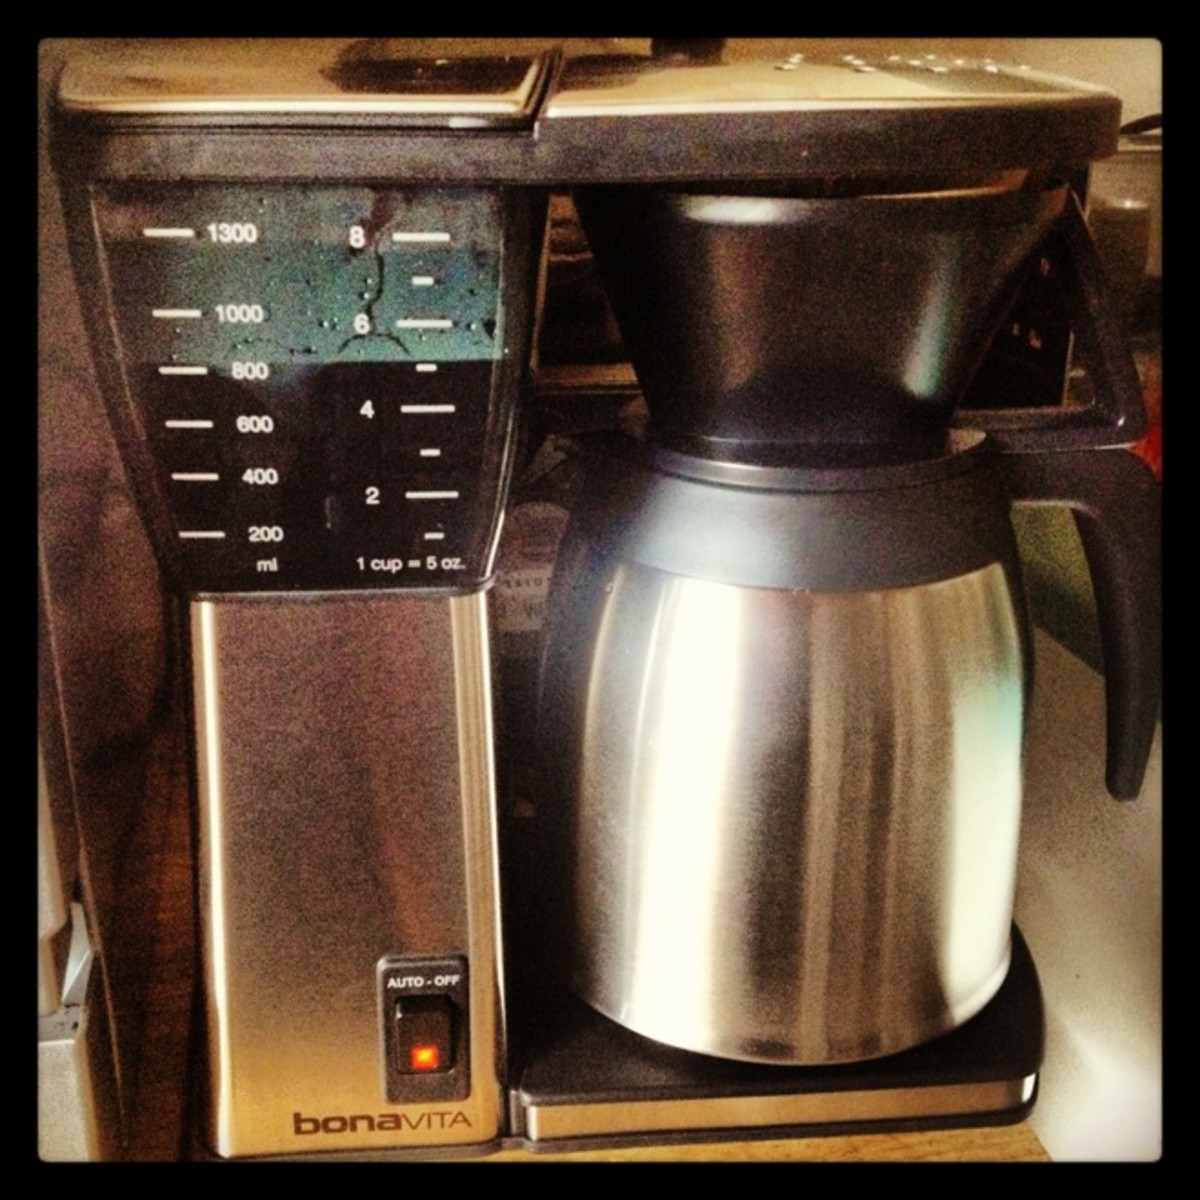 Bonavita 8 cup Thermal Coffeemaker BV1800SS